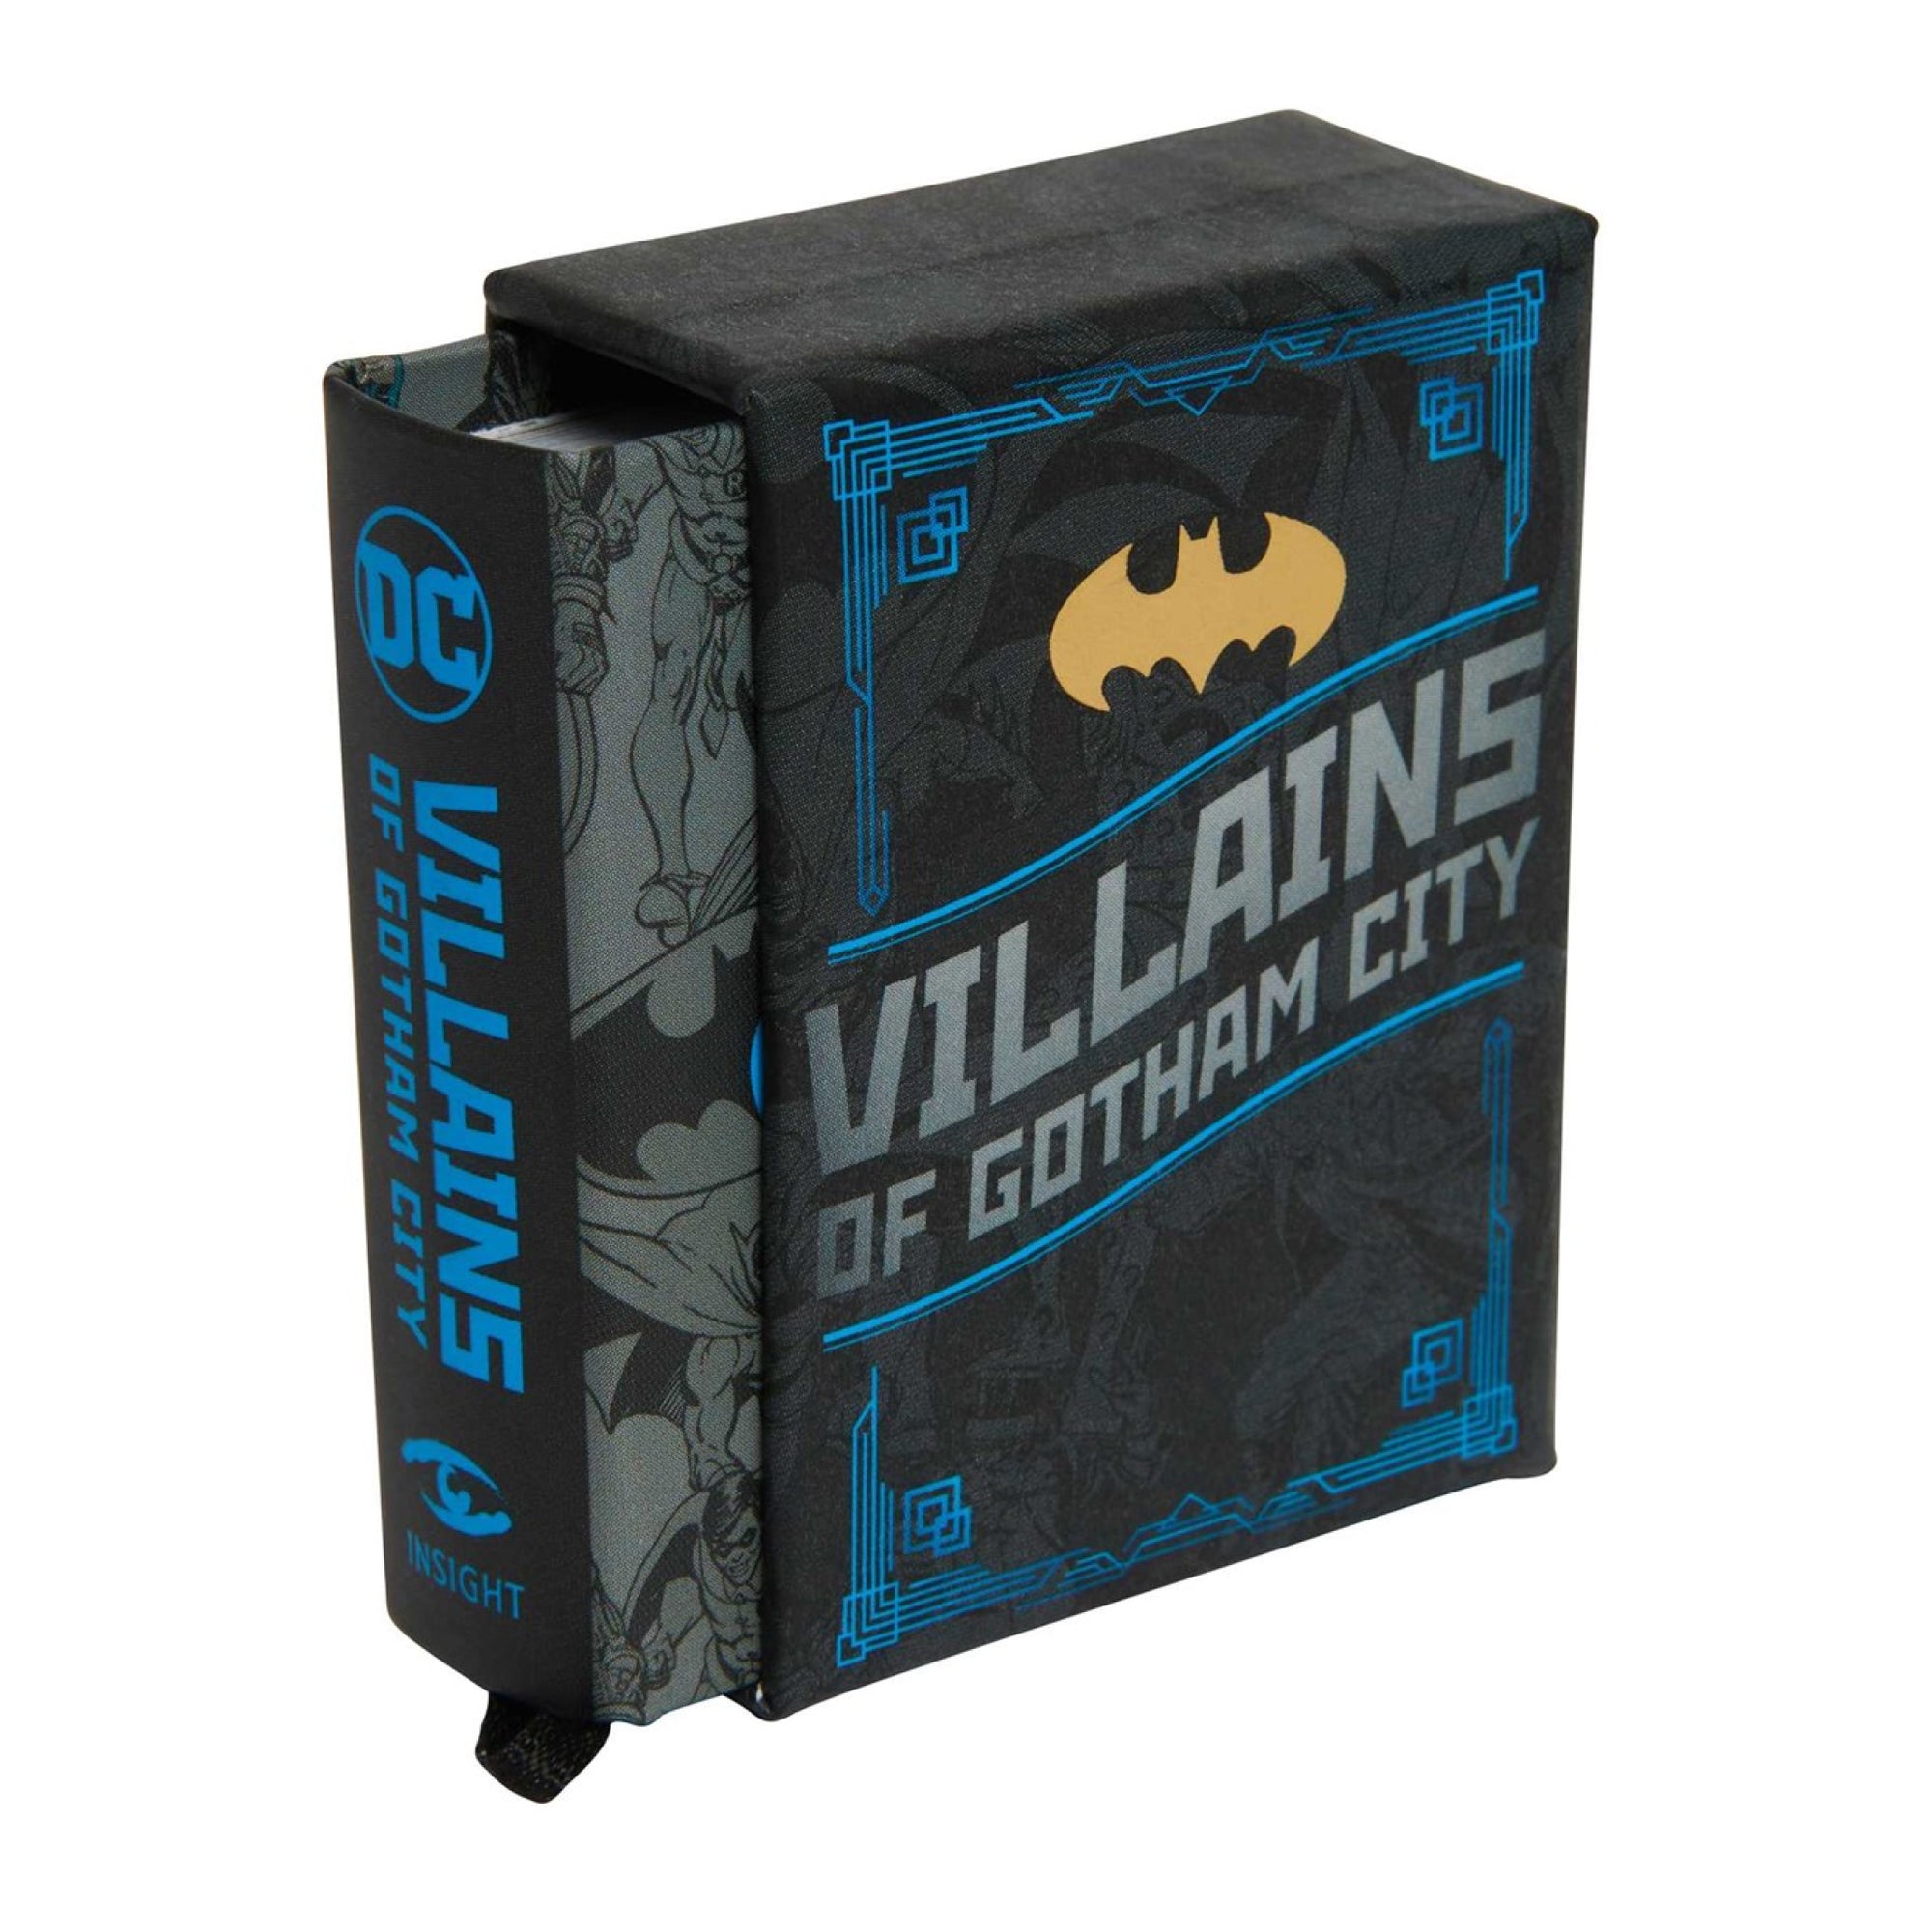 DC Comics: Villains of Gotham City (Tiny Book)